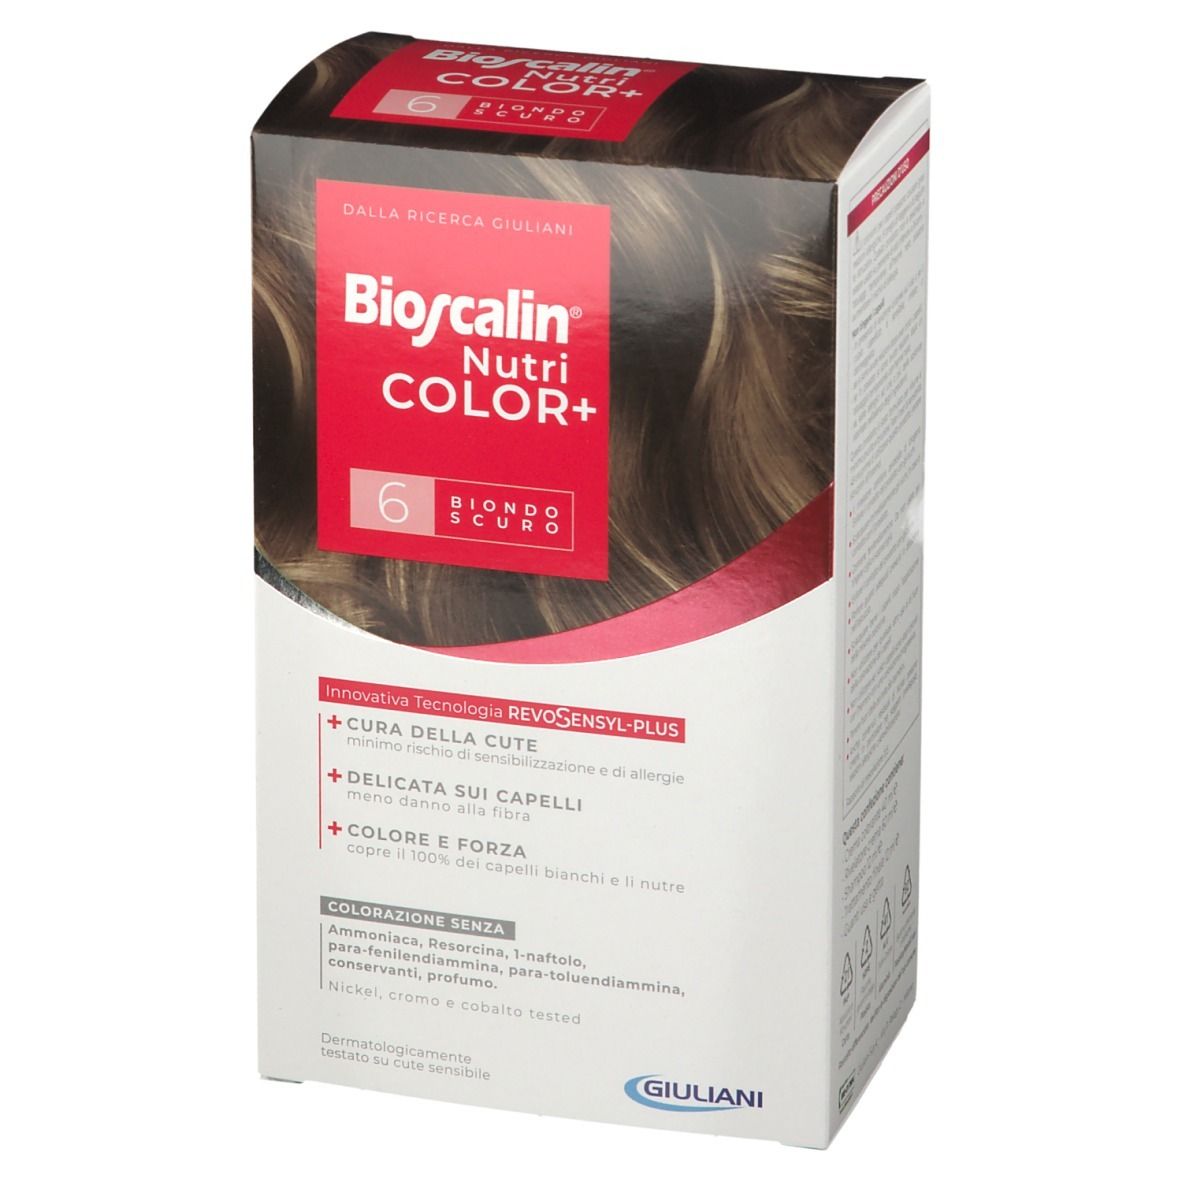 Bioscalin® Nutri COLOR+ 6 Biondo Scuro